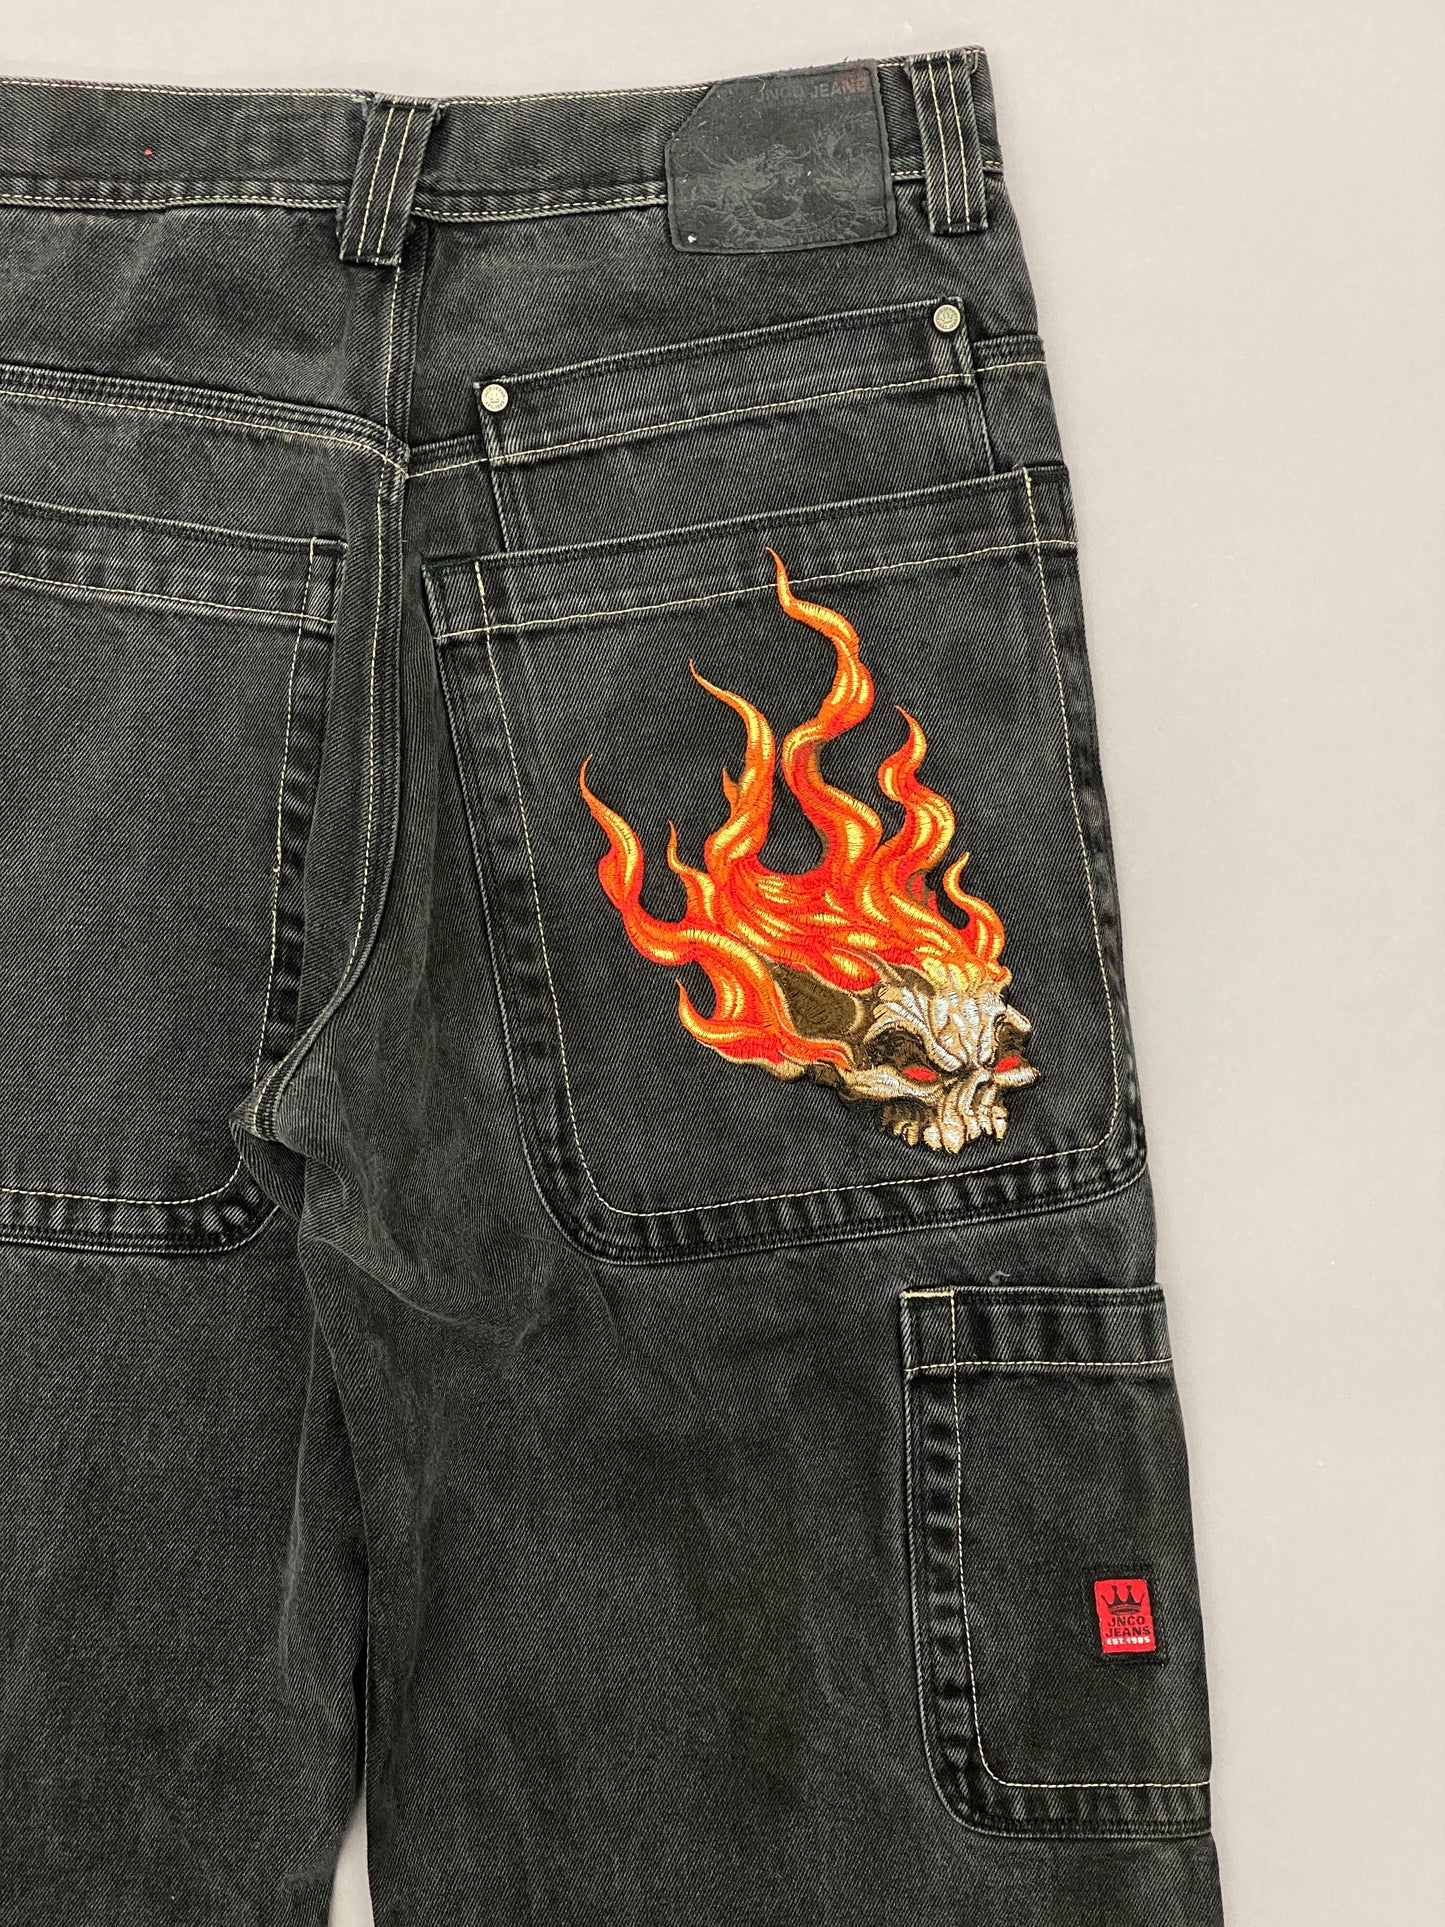 JNCO Flame Skull Vintage Jeans - 33x30